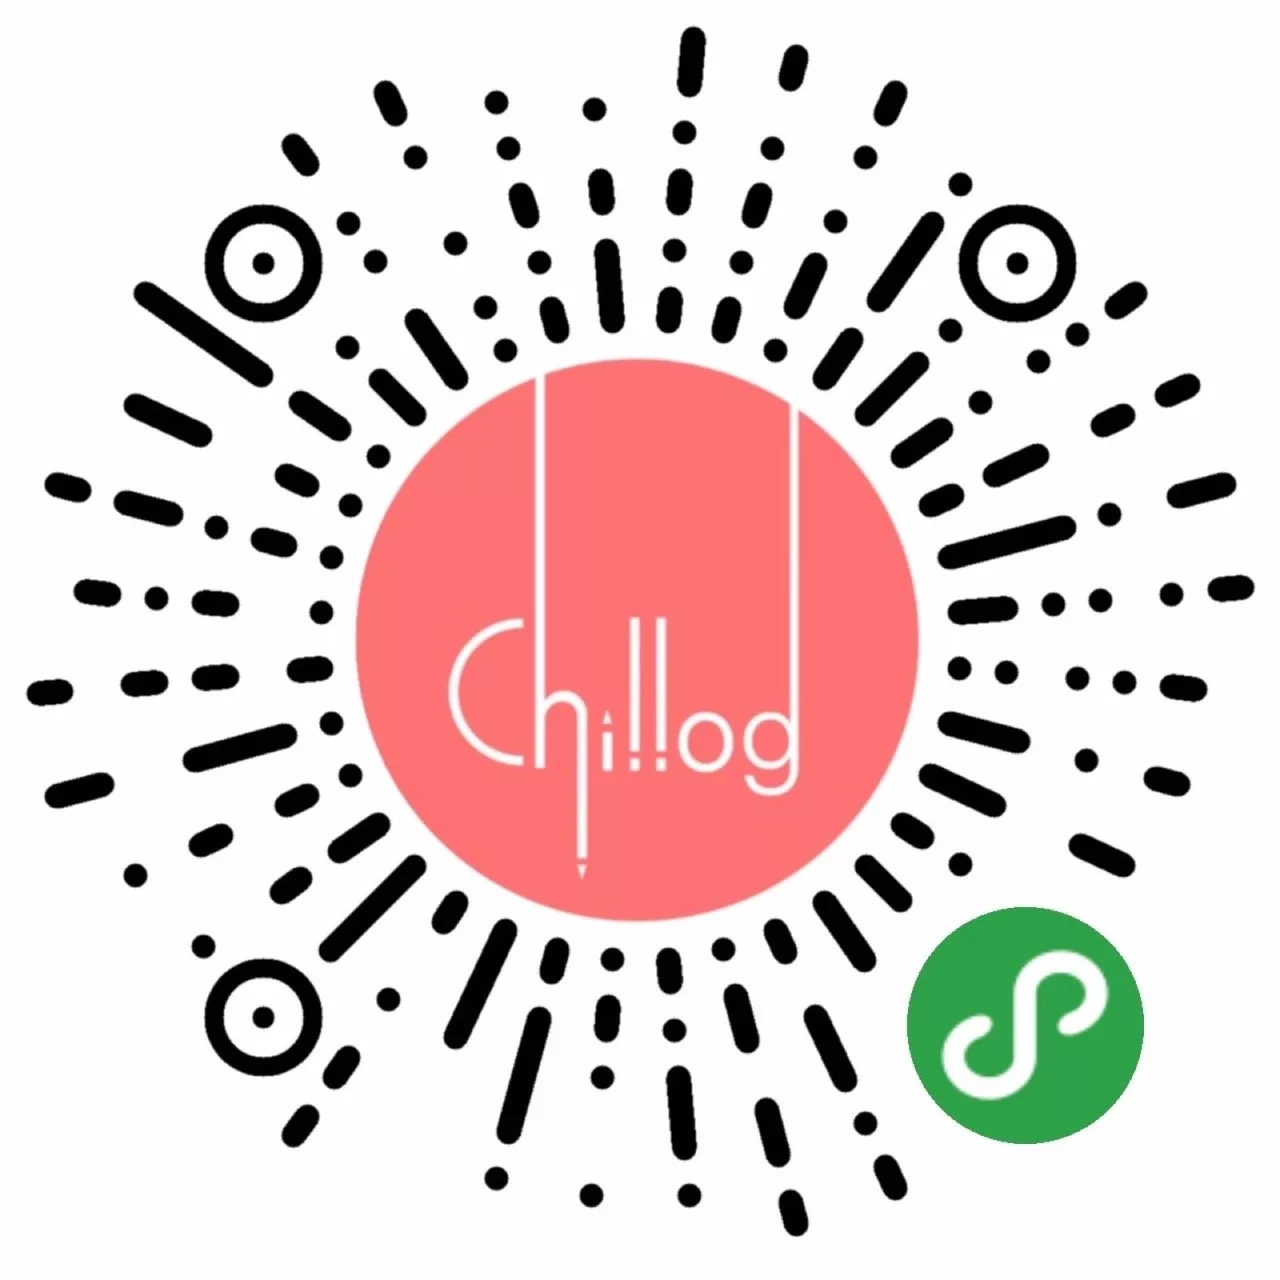 Chillog_Chillog小程序_Chillog微信小程序